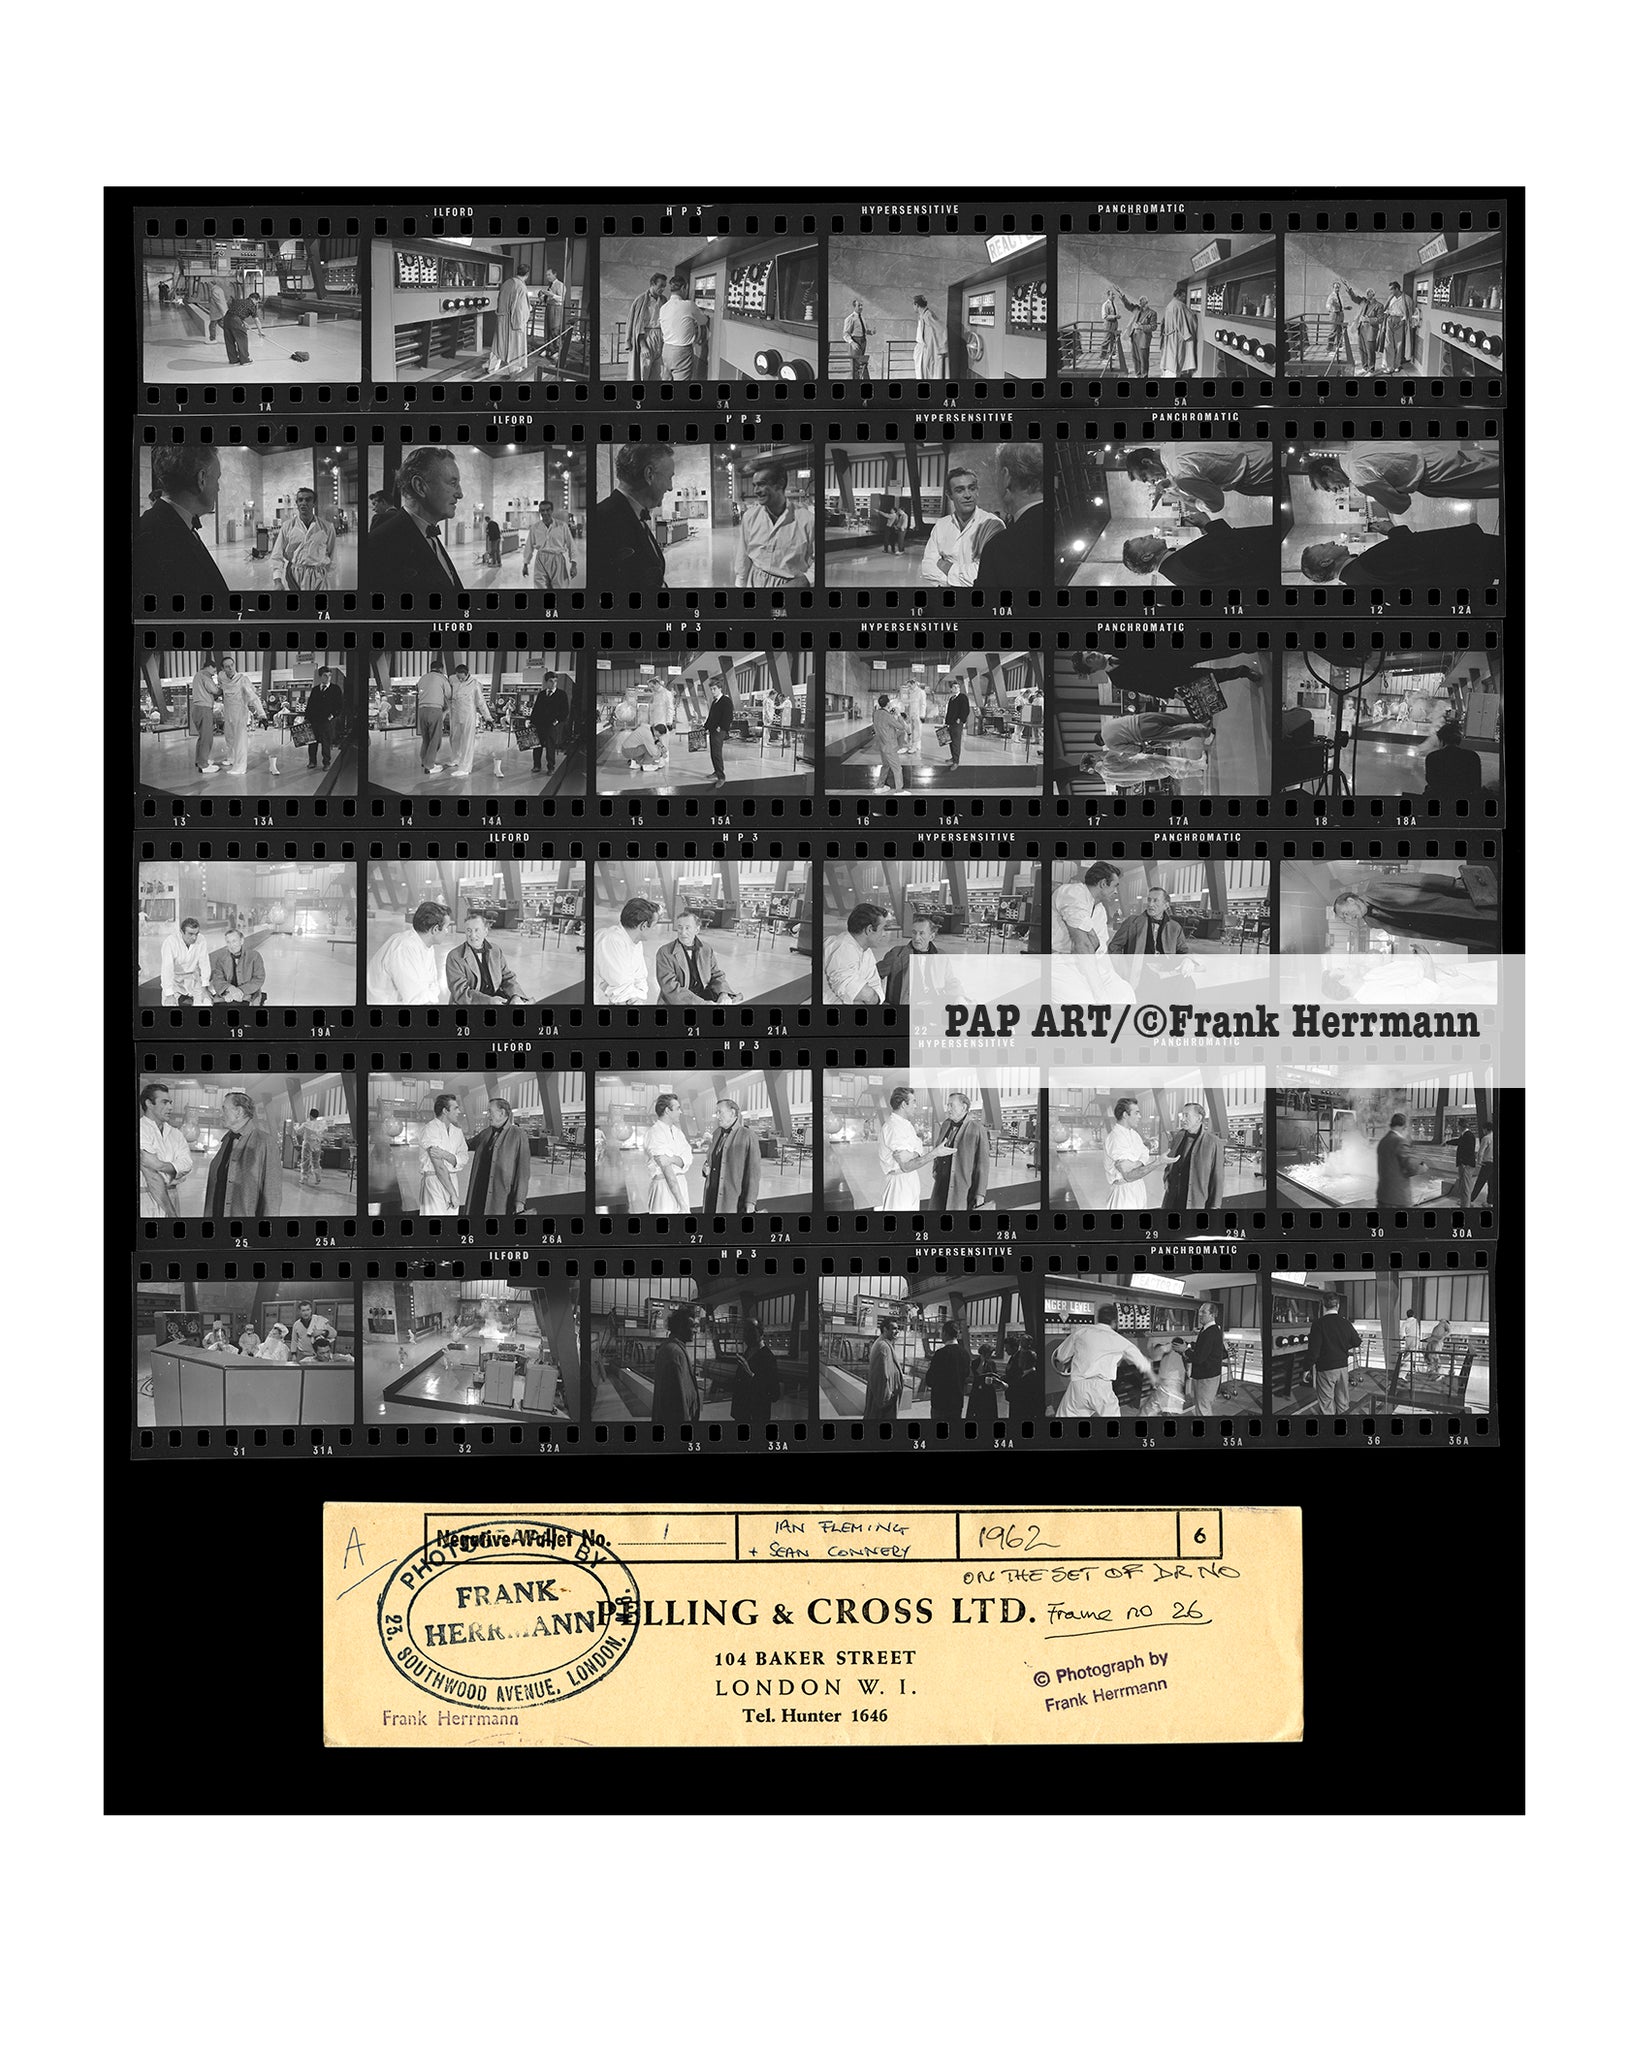 Filming Of Dr. No At Pinewood Studios, 1962 - Contact Sheet LARGE